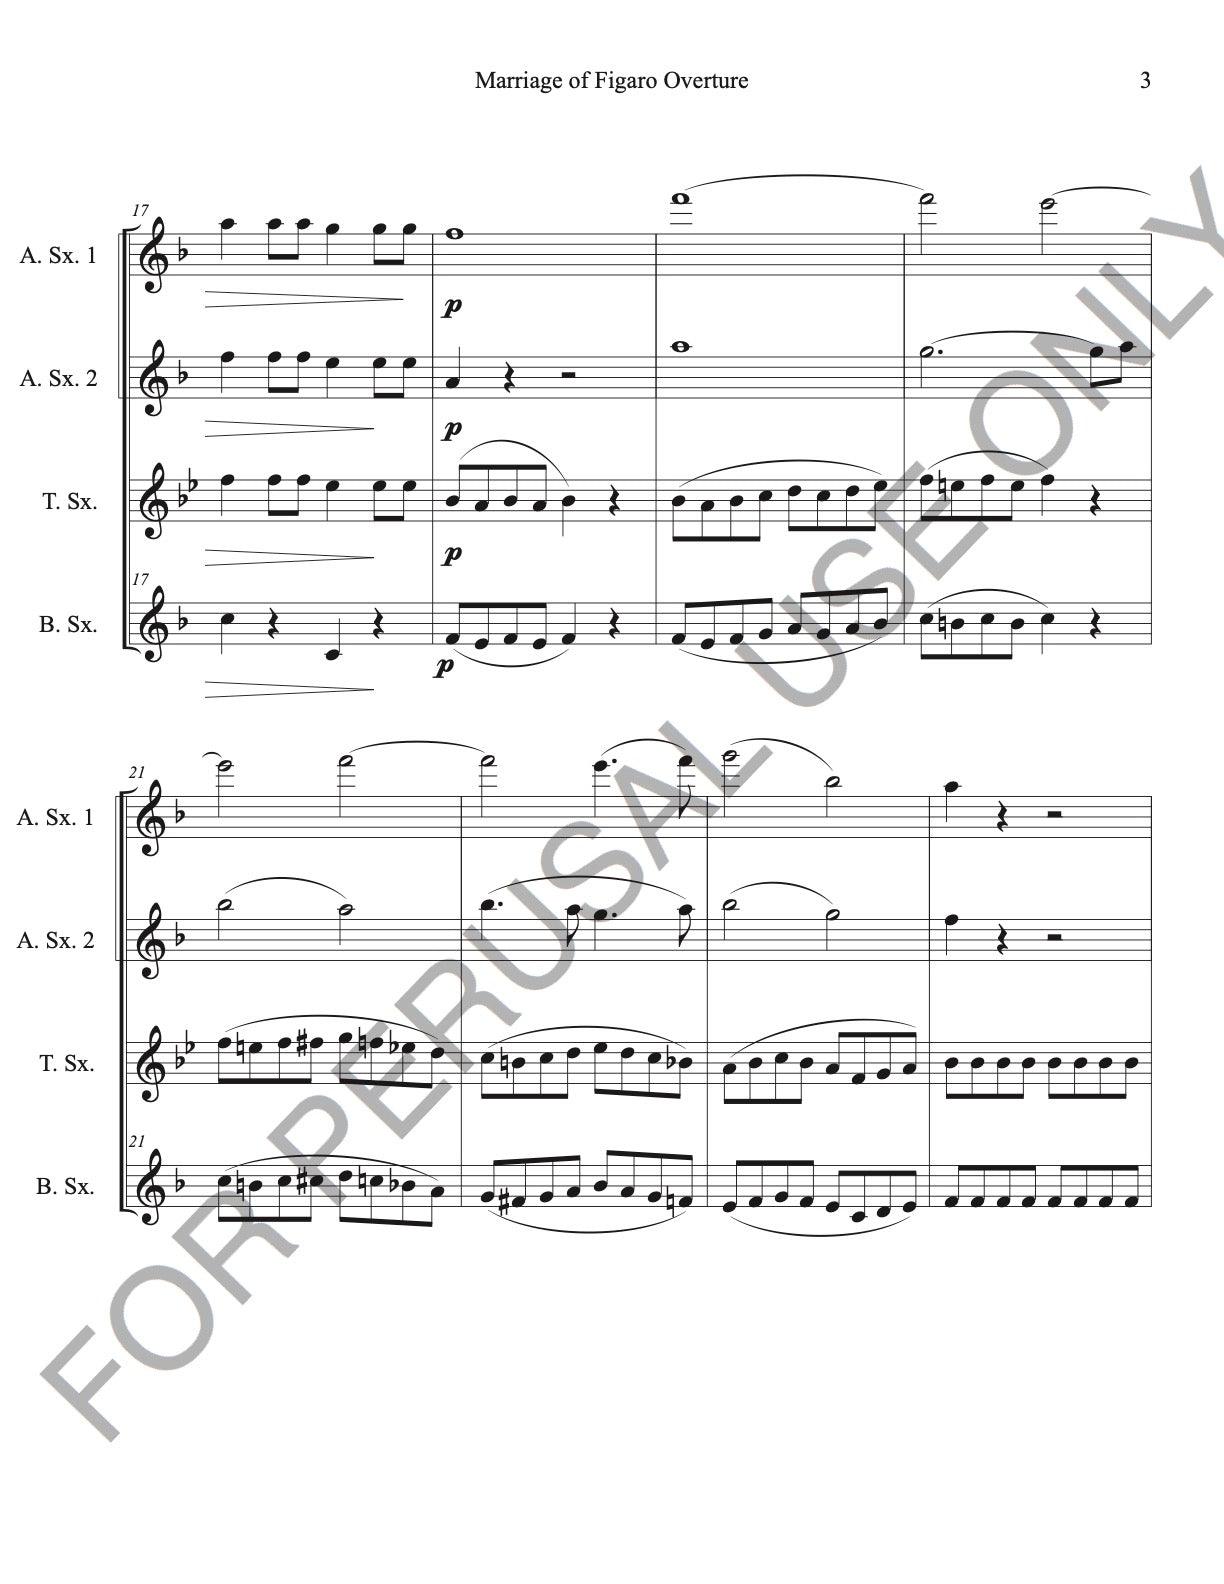 Sax Quartet sheet music (AATB)- The Marriage of Figaro Overture - ChaipruckMekara